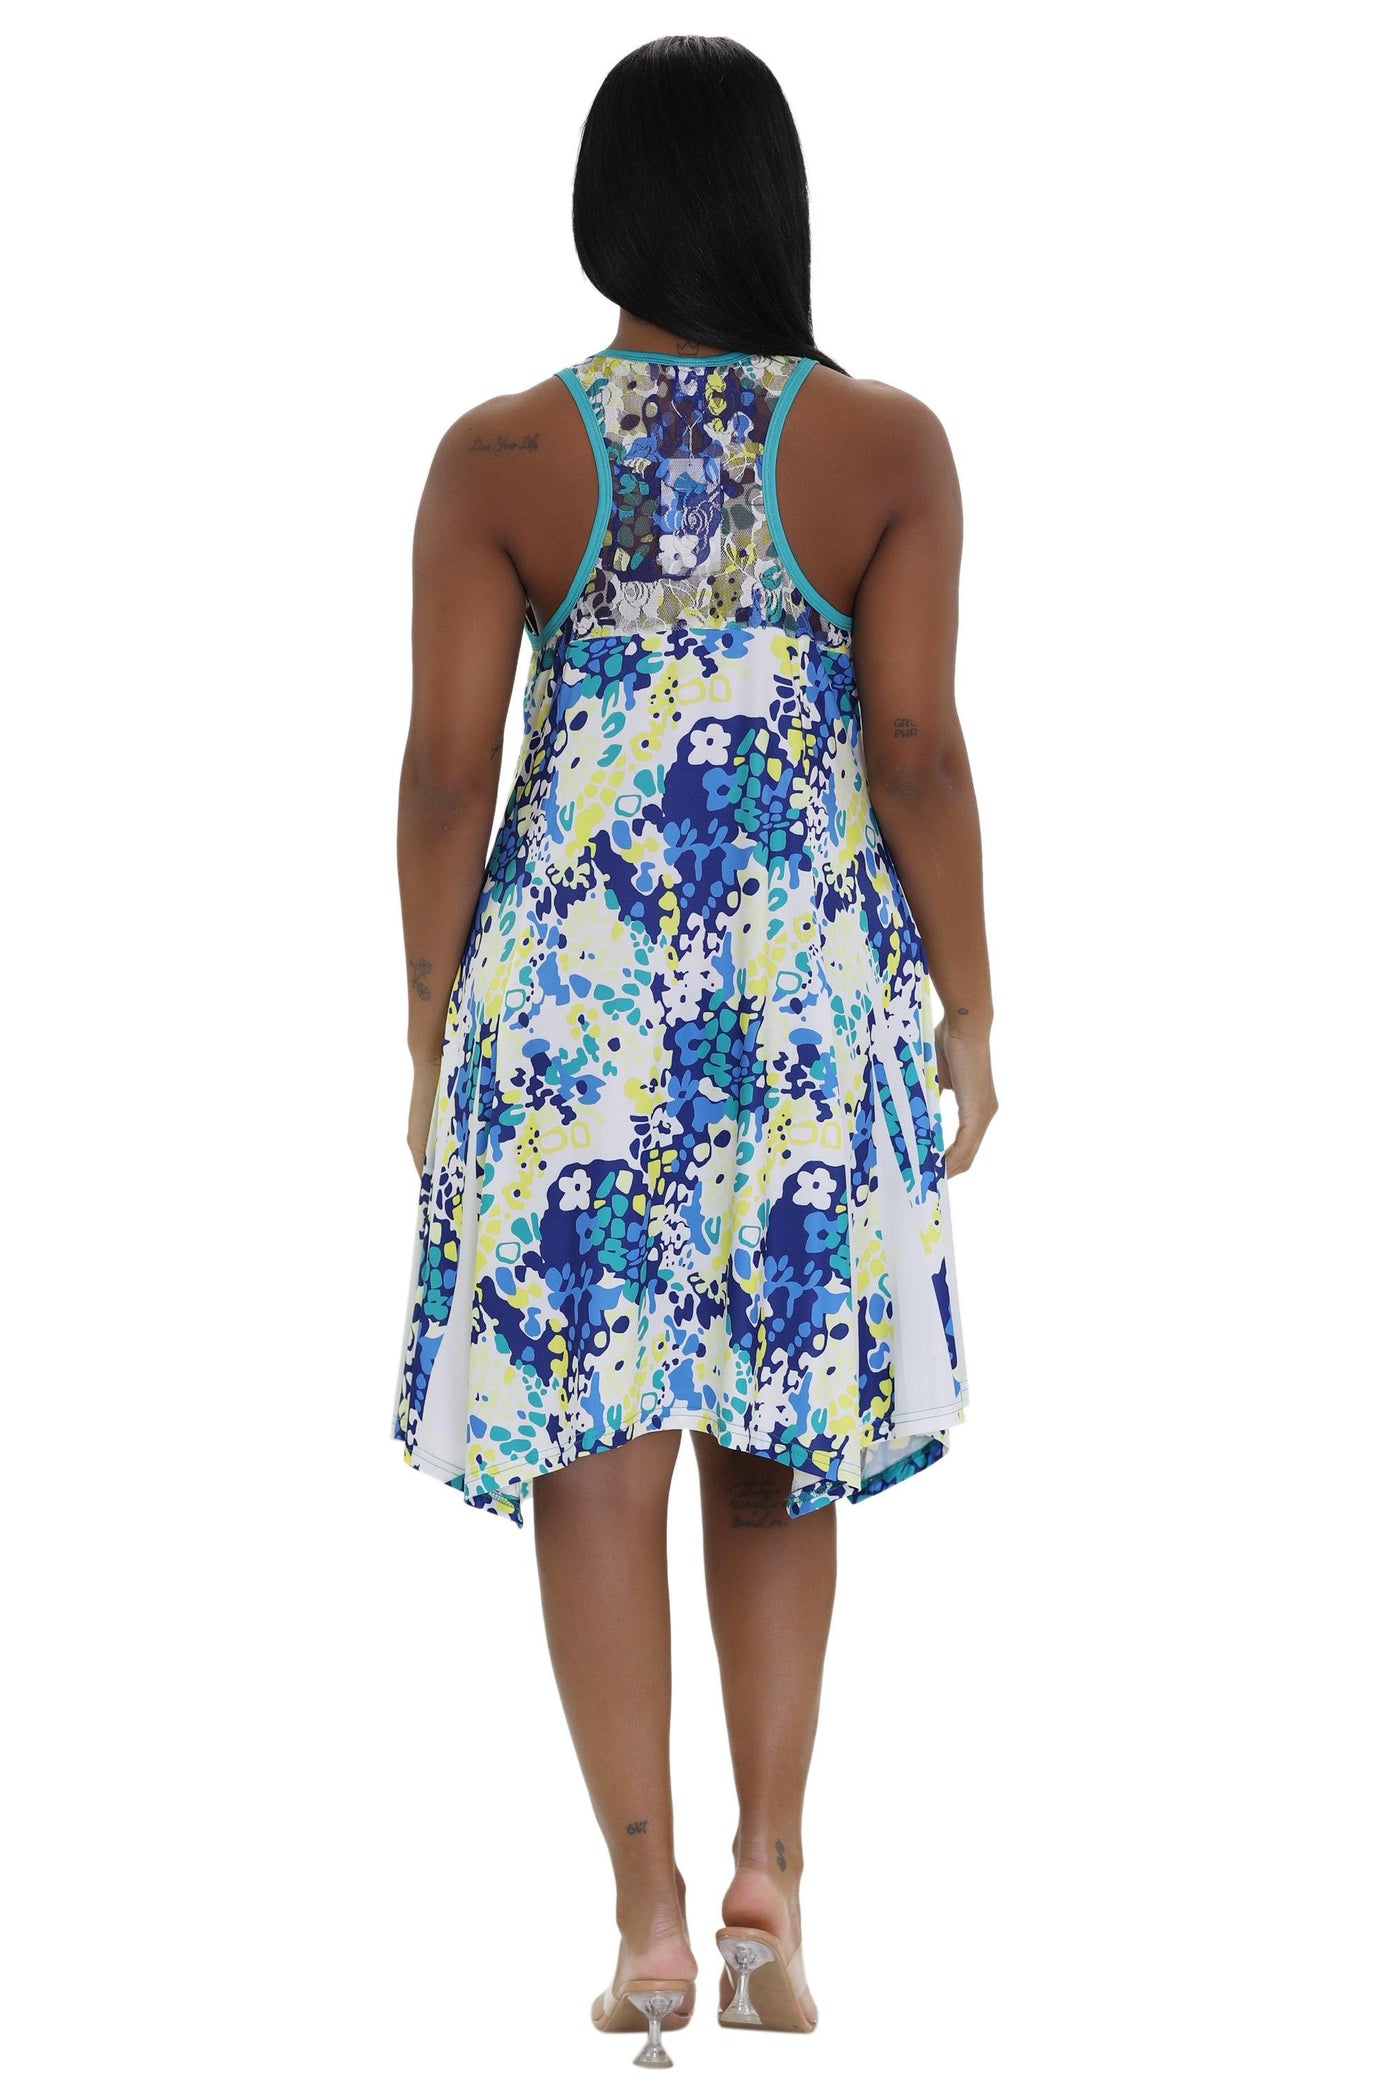 Floral Print Resort Dress 21233  - Advance Apparels Inc